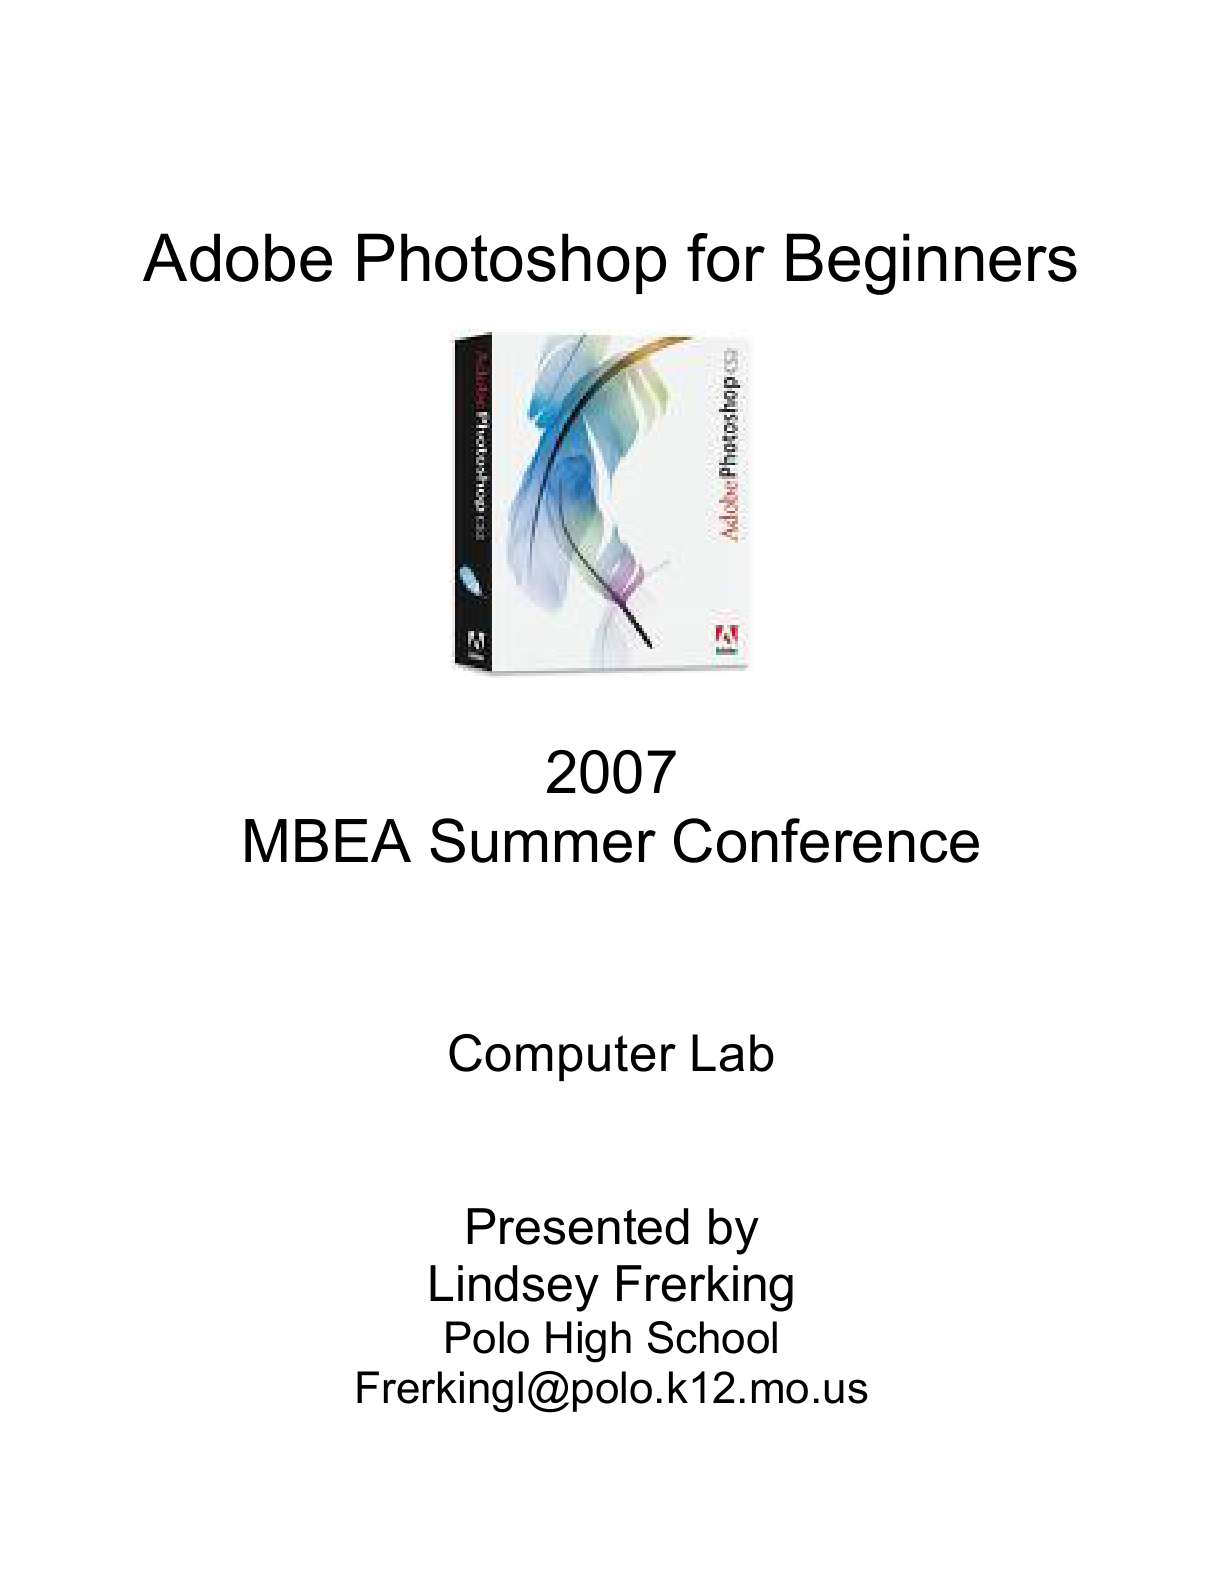 Adobe Photoshop Book Free Download